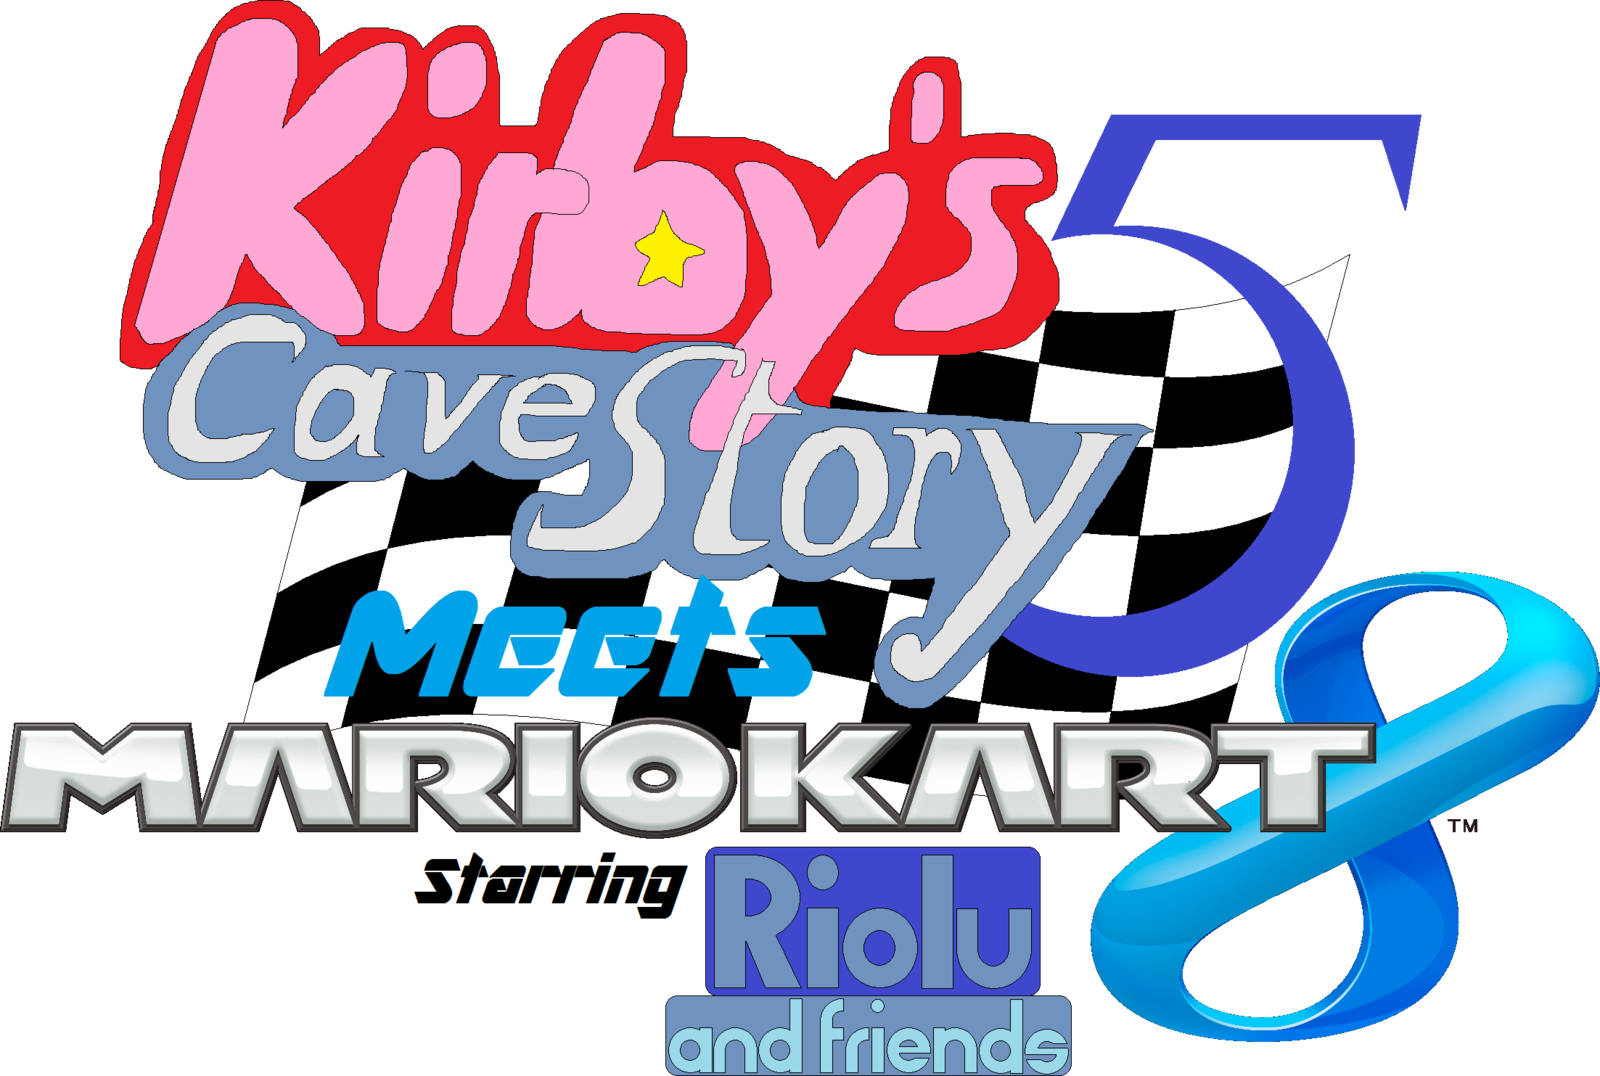 Kirby's Cave Story 5 Meets Mario Kart 8 Logo By Bluecatriolu - Mario Kart 8 (1600x1076)